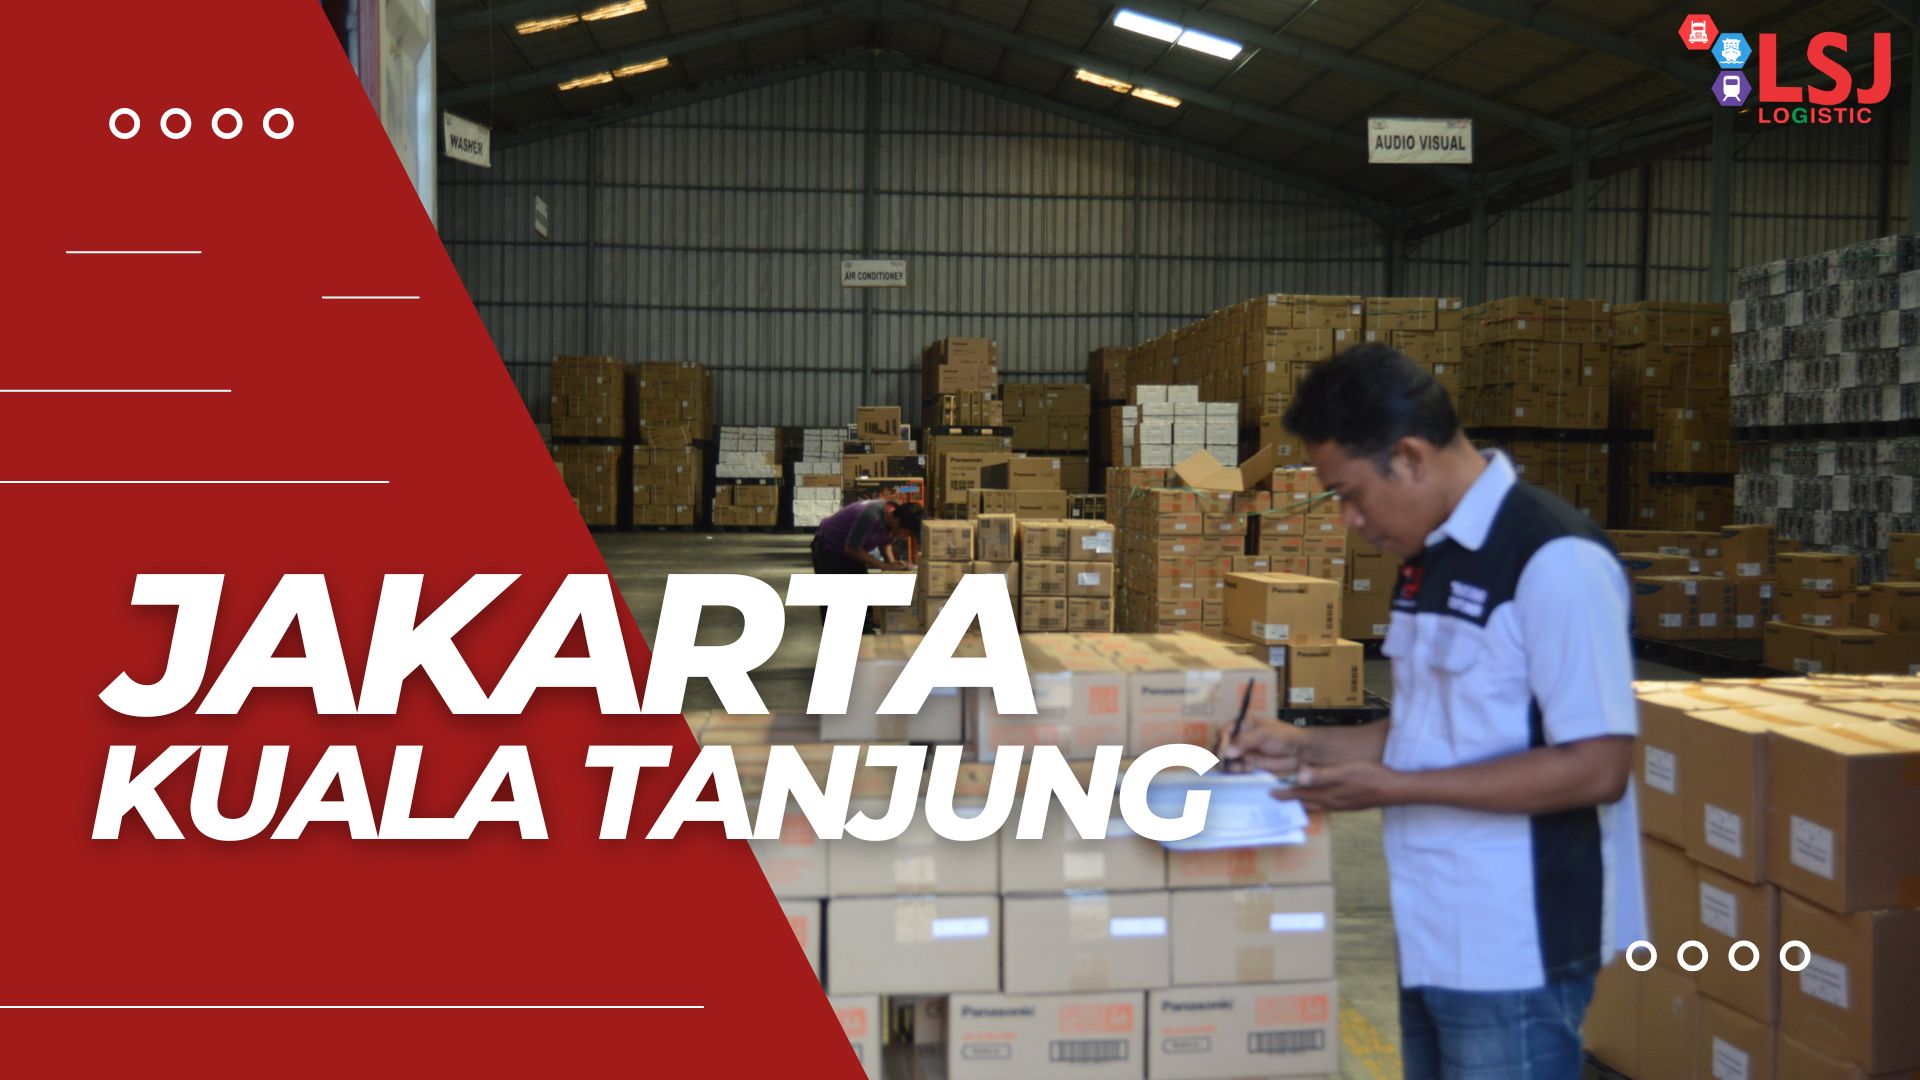 Harga Pengiriman Container Jakarta Kuala Tanjung